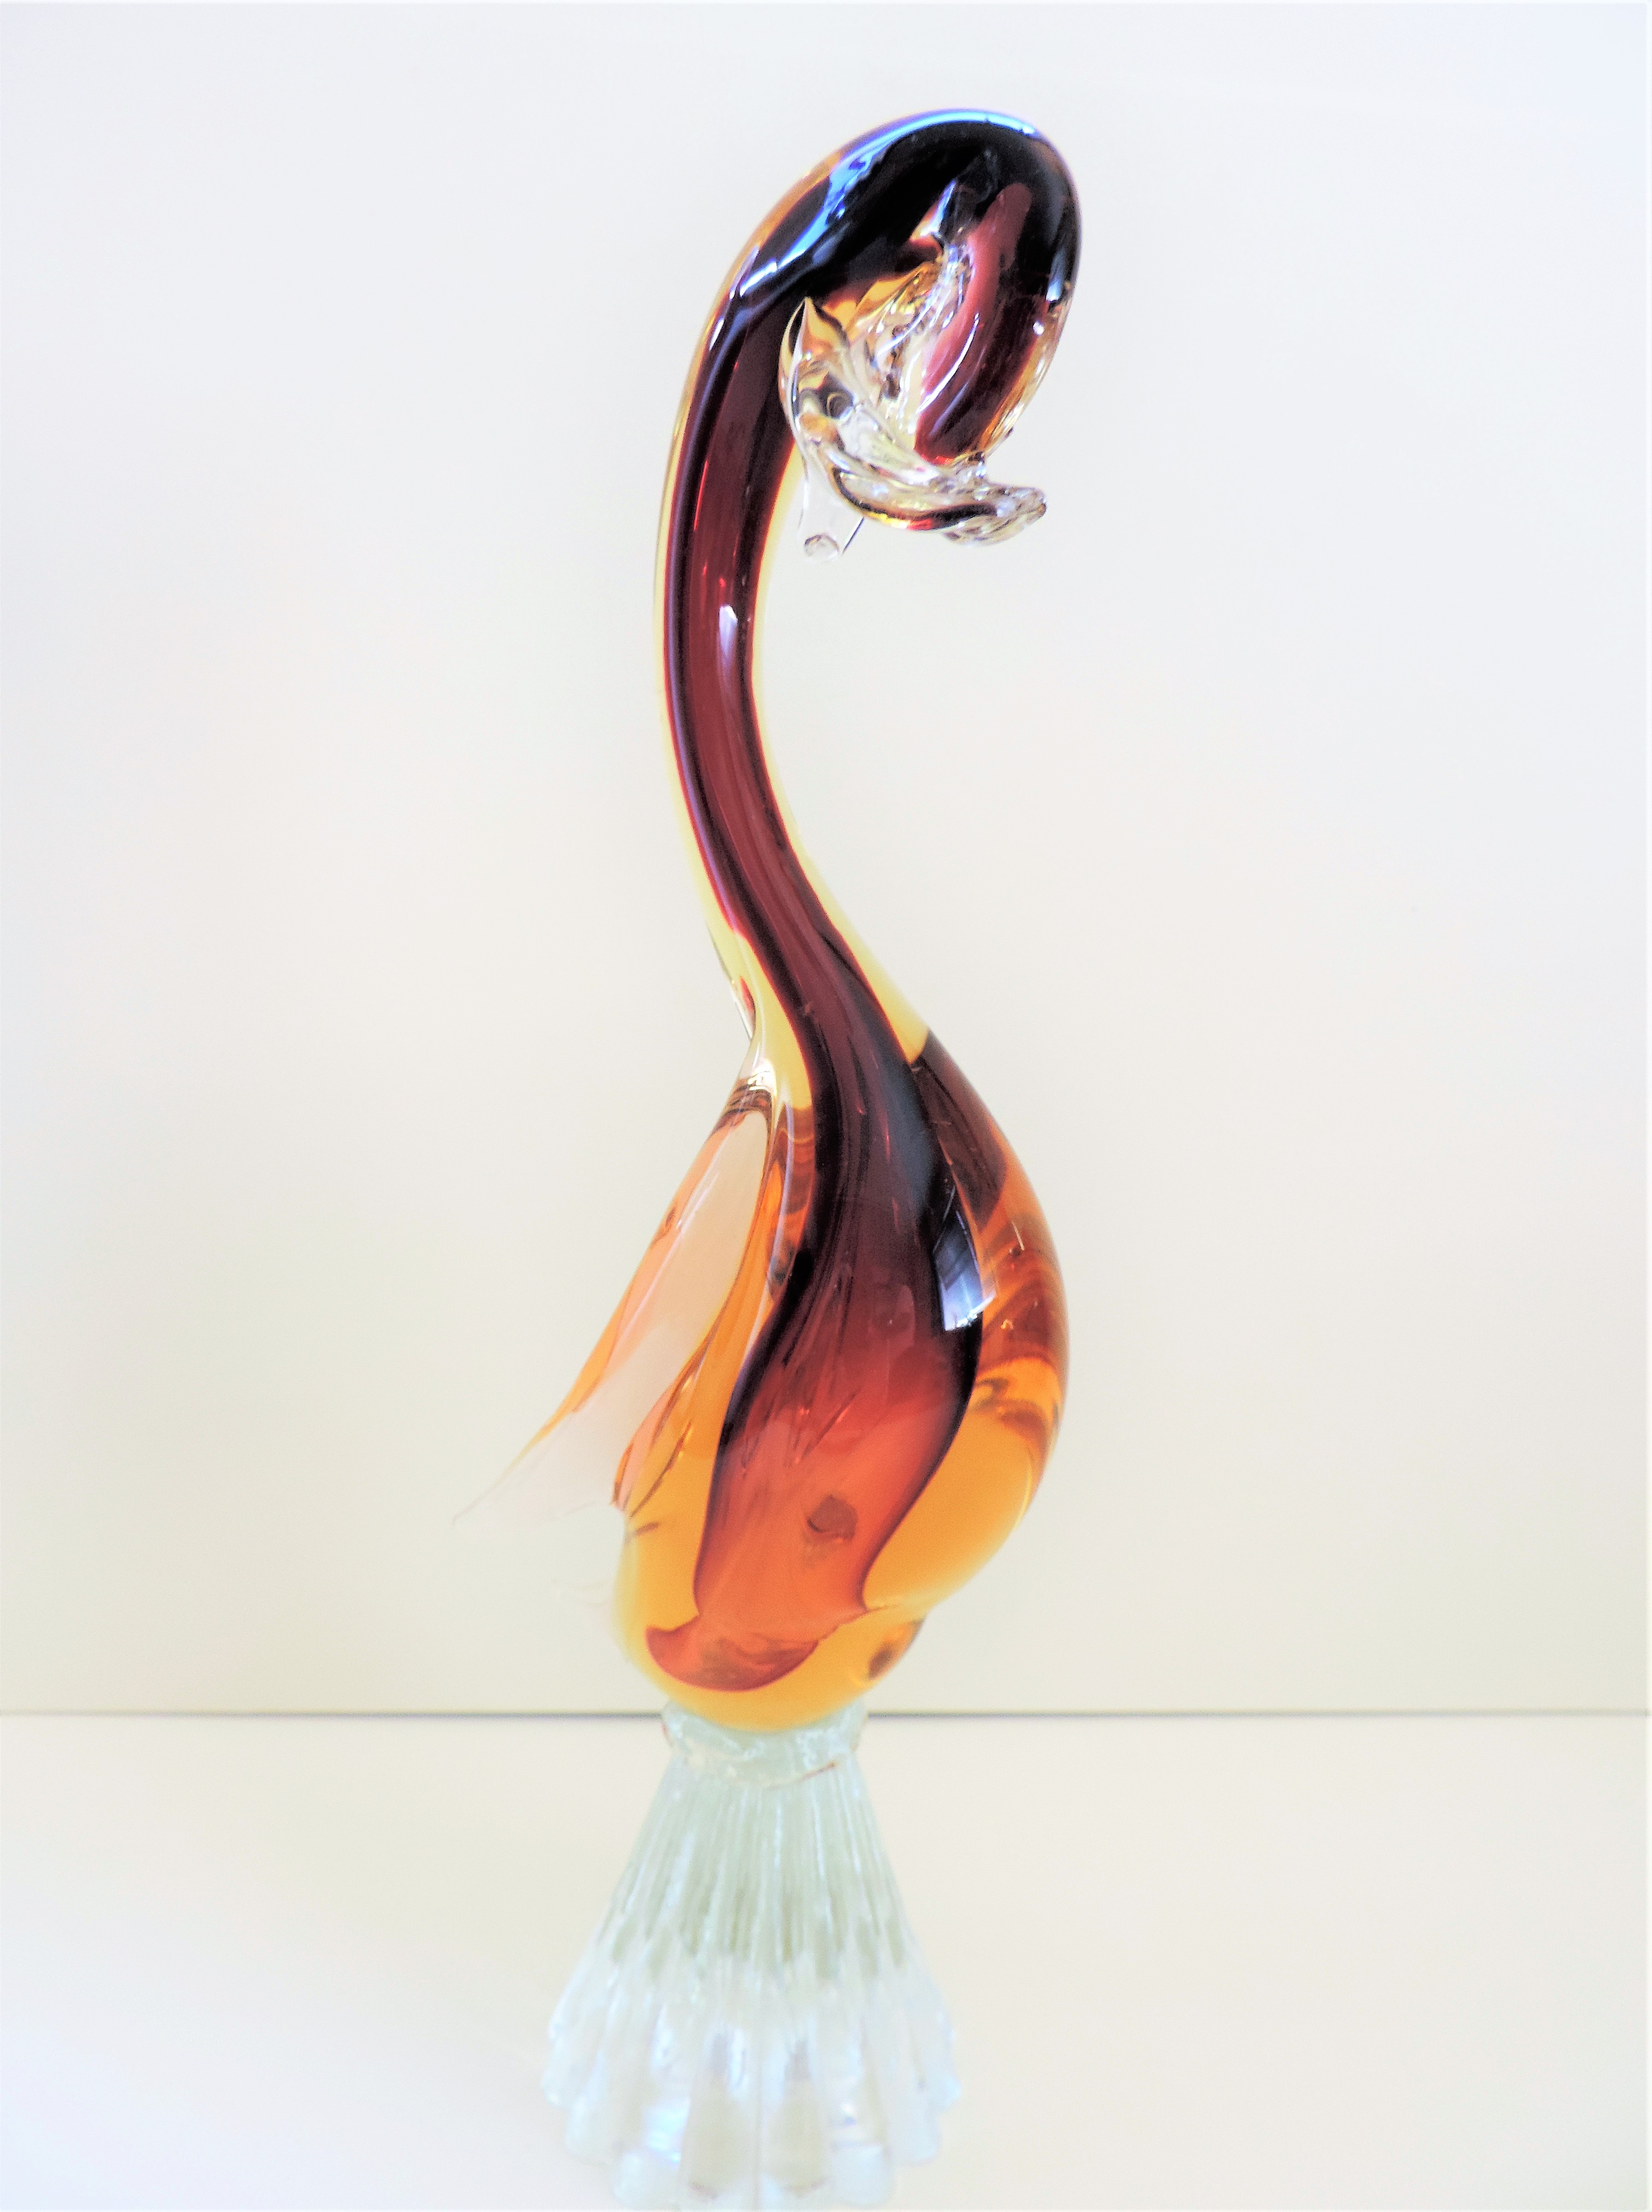 Murano Art Glass Sculpture 33cm Tall - Image 3 of 8